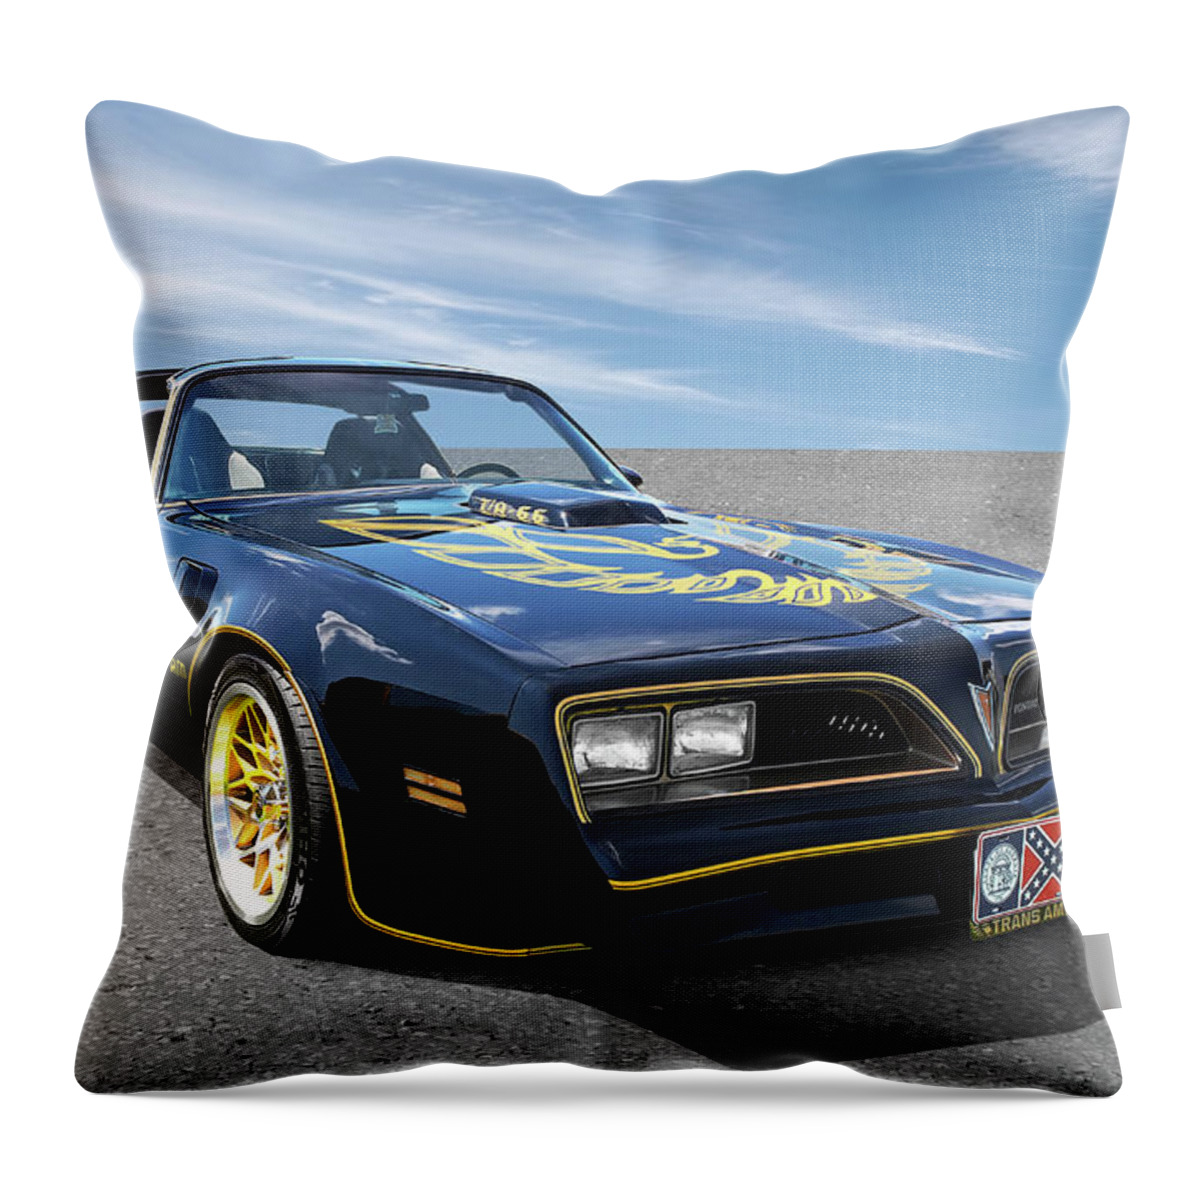 Pontiac Firebird Throw Pillow featuring the photograph Smokey And The Bandit Trans Am by Gill Billington